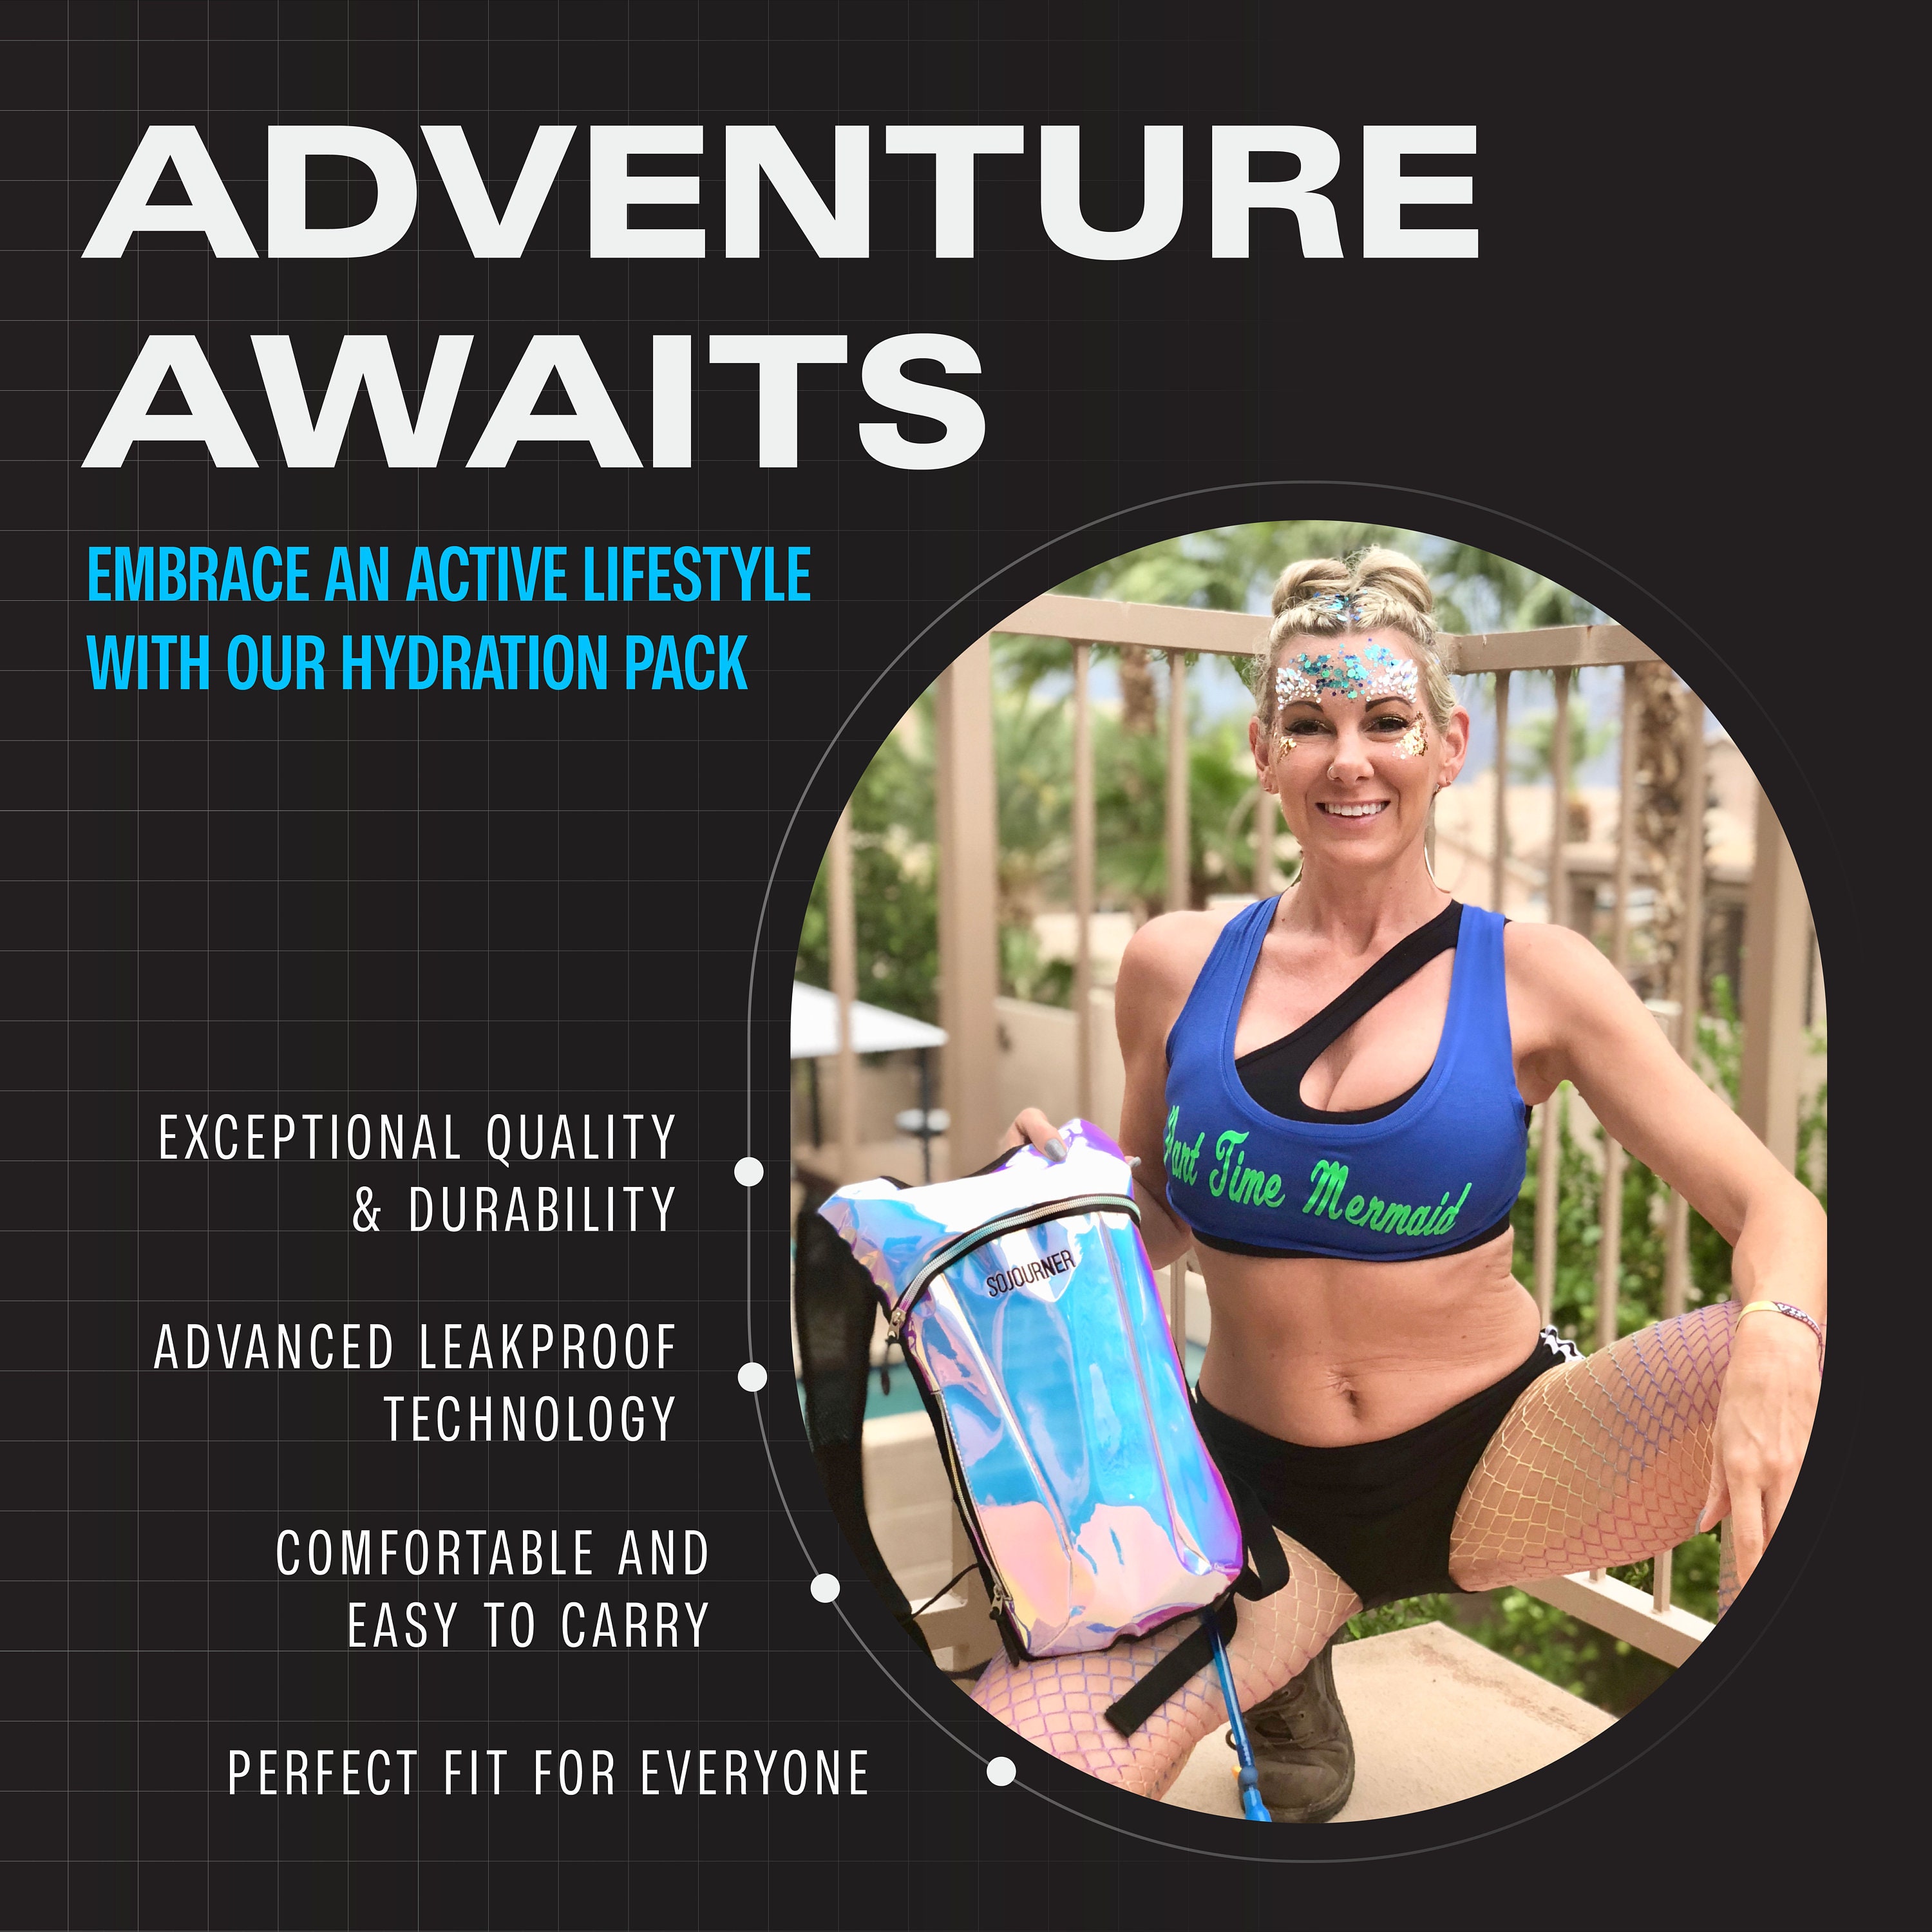 Sojourner Hydration Pack Backpack 2L Water Bladder Included